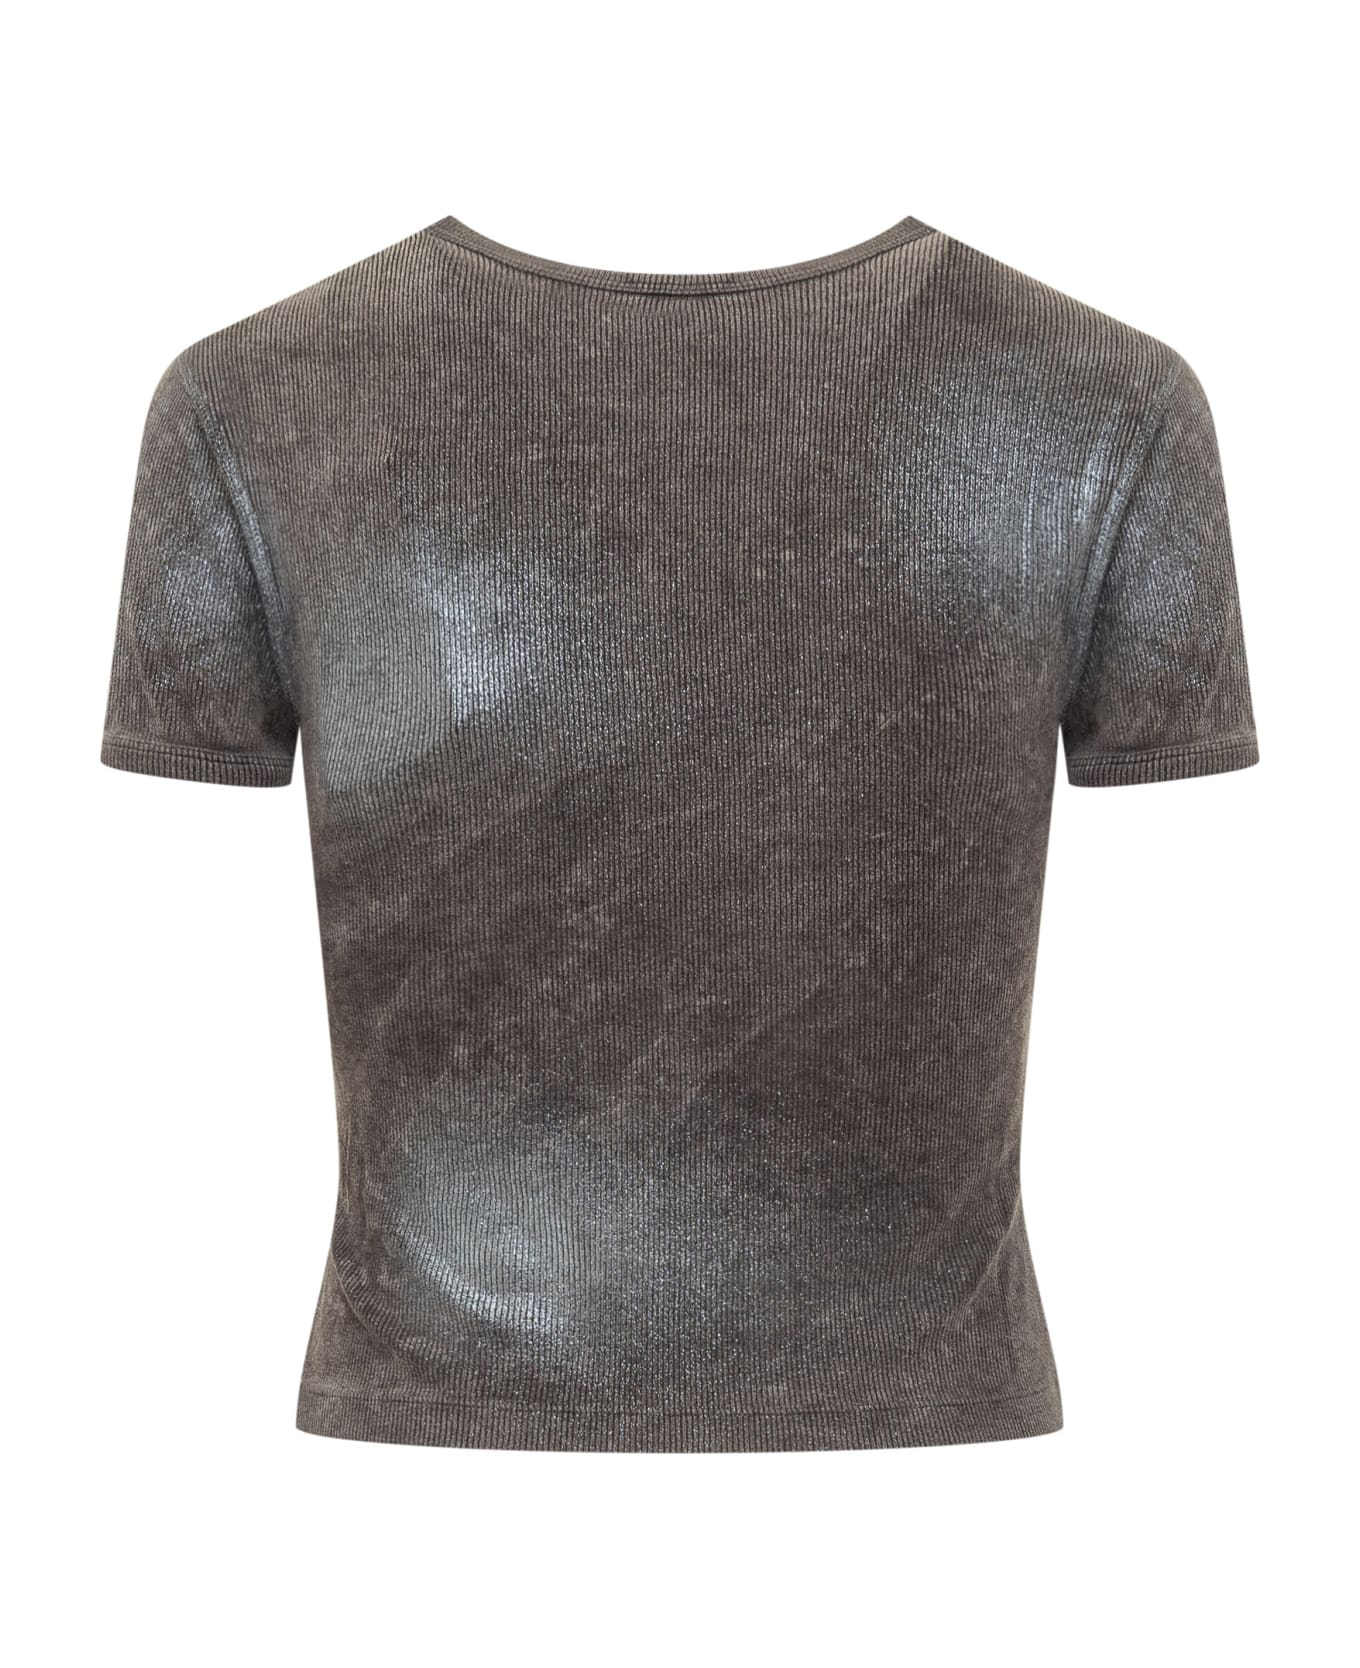 Diesel T-elen1 T-shirt - Grey